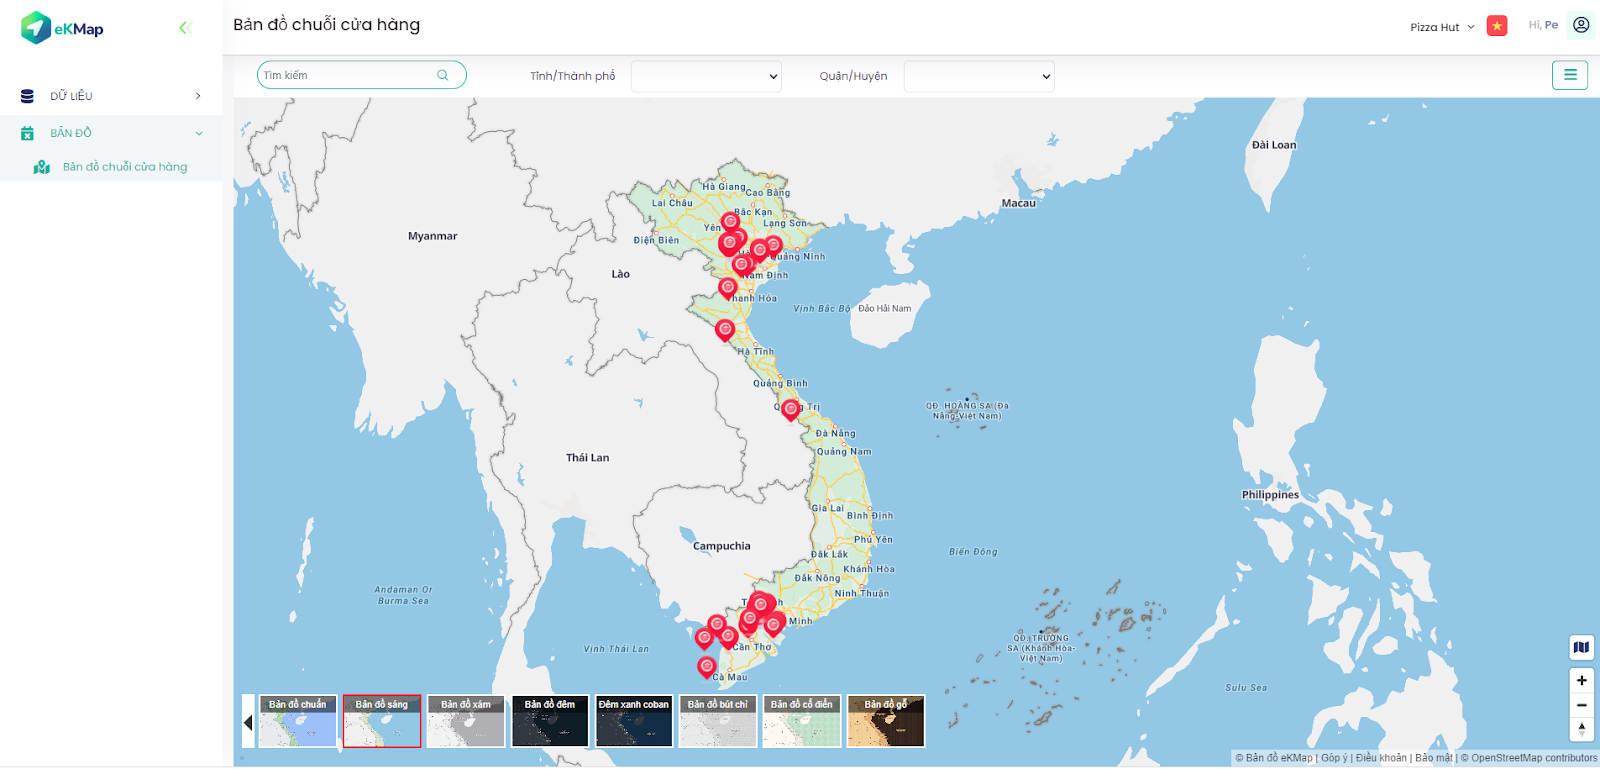 MapBiz-ho-tro-doanh-nghiep-trai-nghiem-website-nhu-google-maps